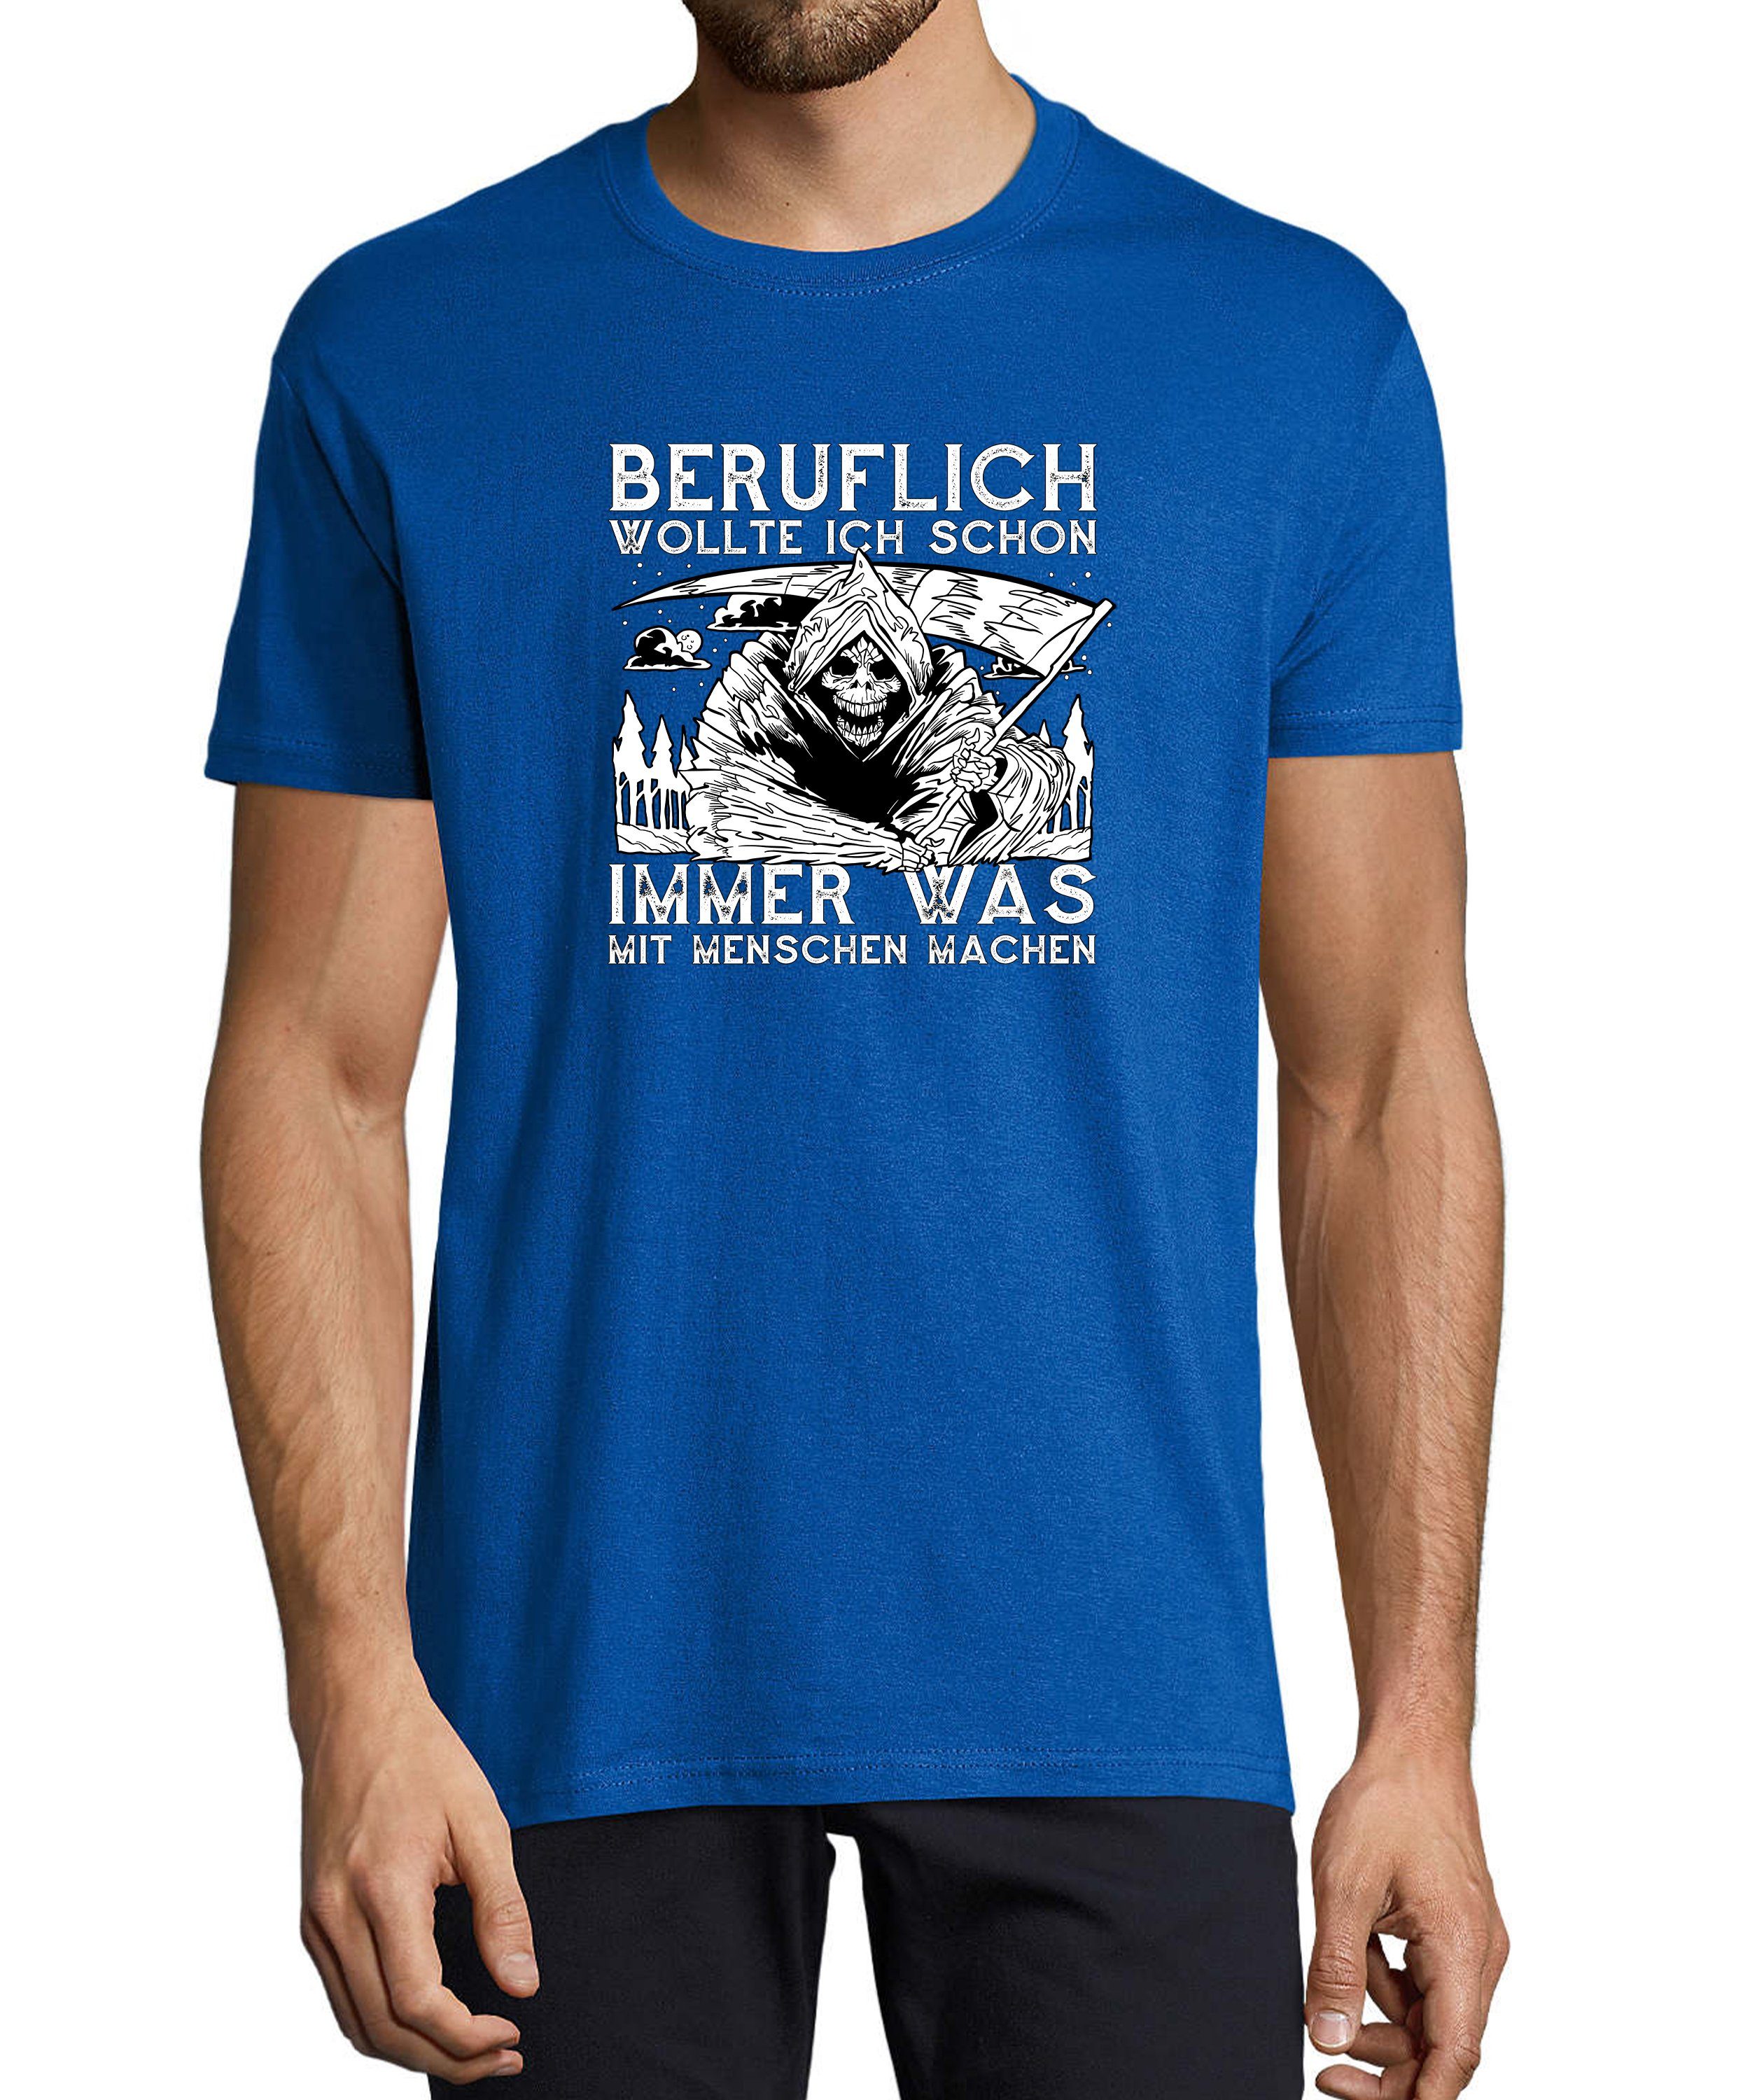 Fit, Herren Baumwollshirt Aufdruck royal Reaper mit Shirt i299 Print MyDesign24 Grim Sense - Regular mit T-Shirt blau Skelett